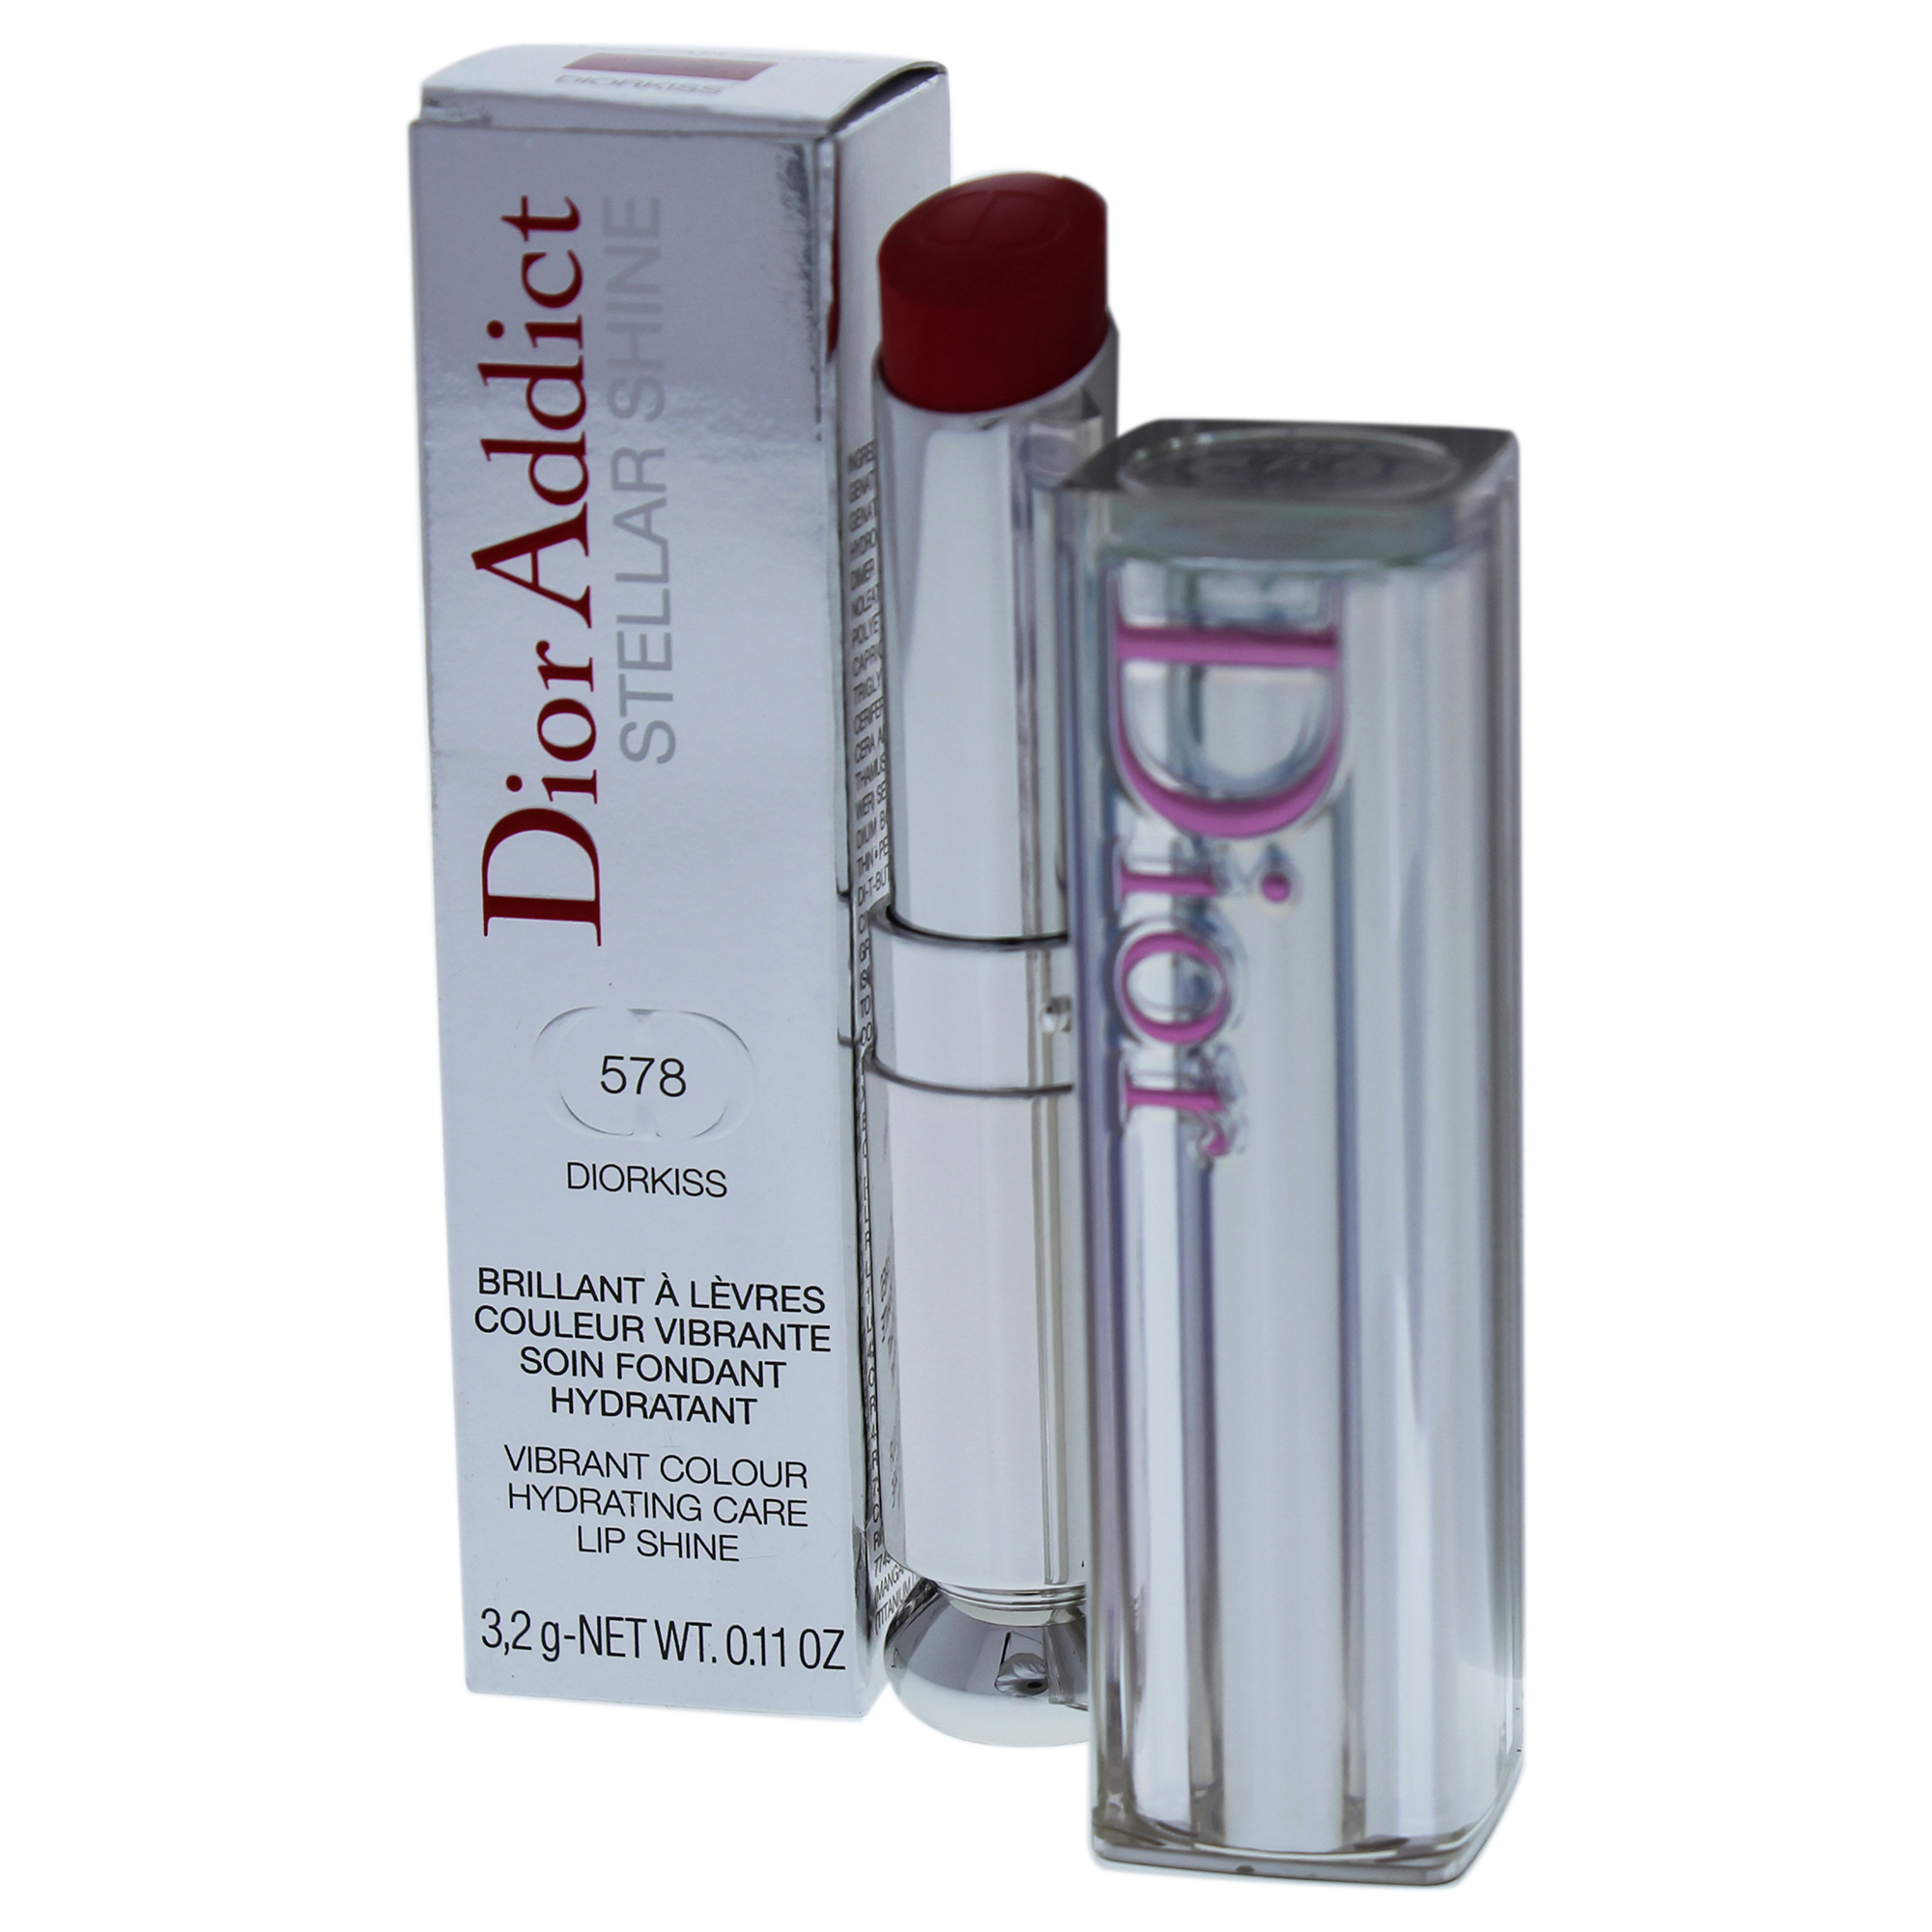 Christian Dior Addict Stellar Shine Lipstick - 578 Diorkiss 0.11 oz Lipstick - image 1 of 2